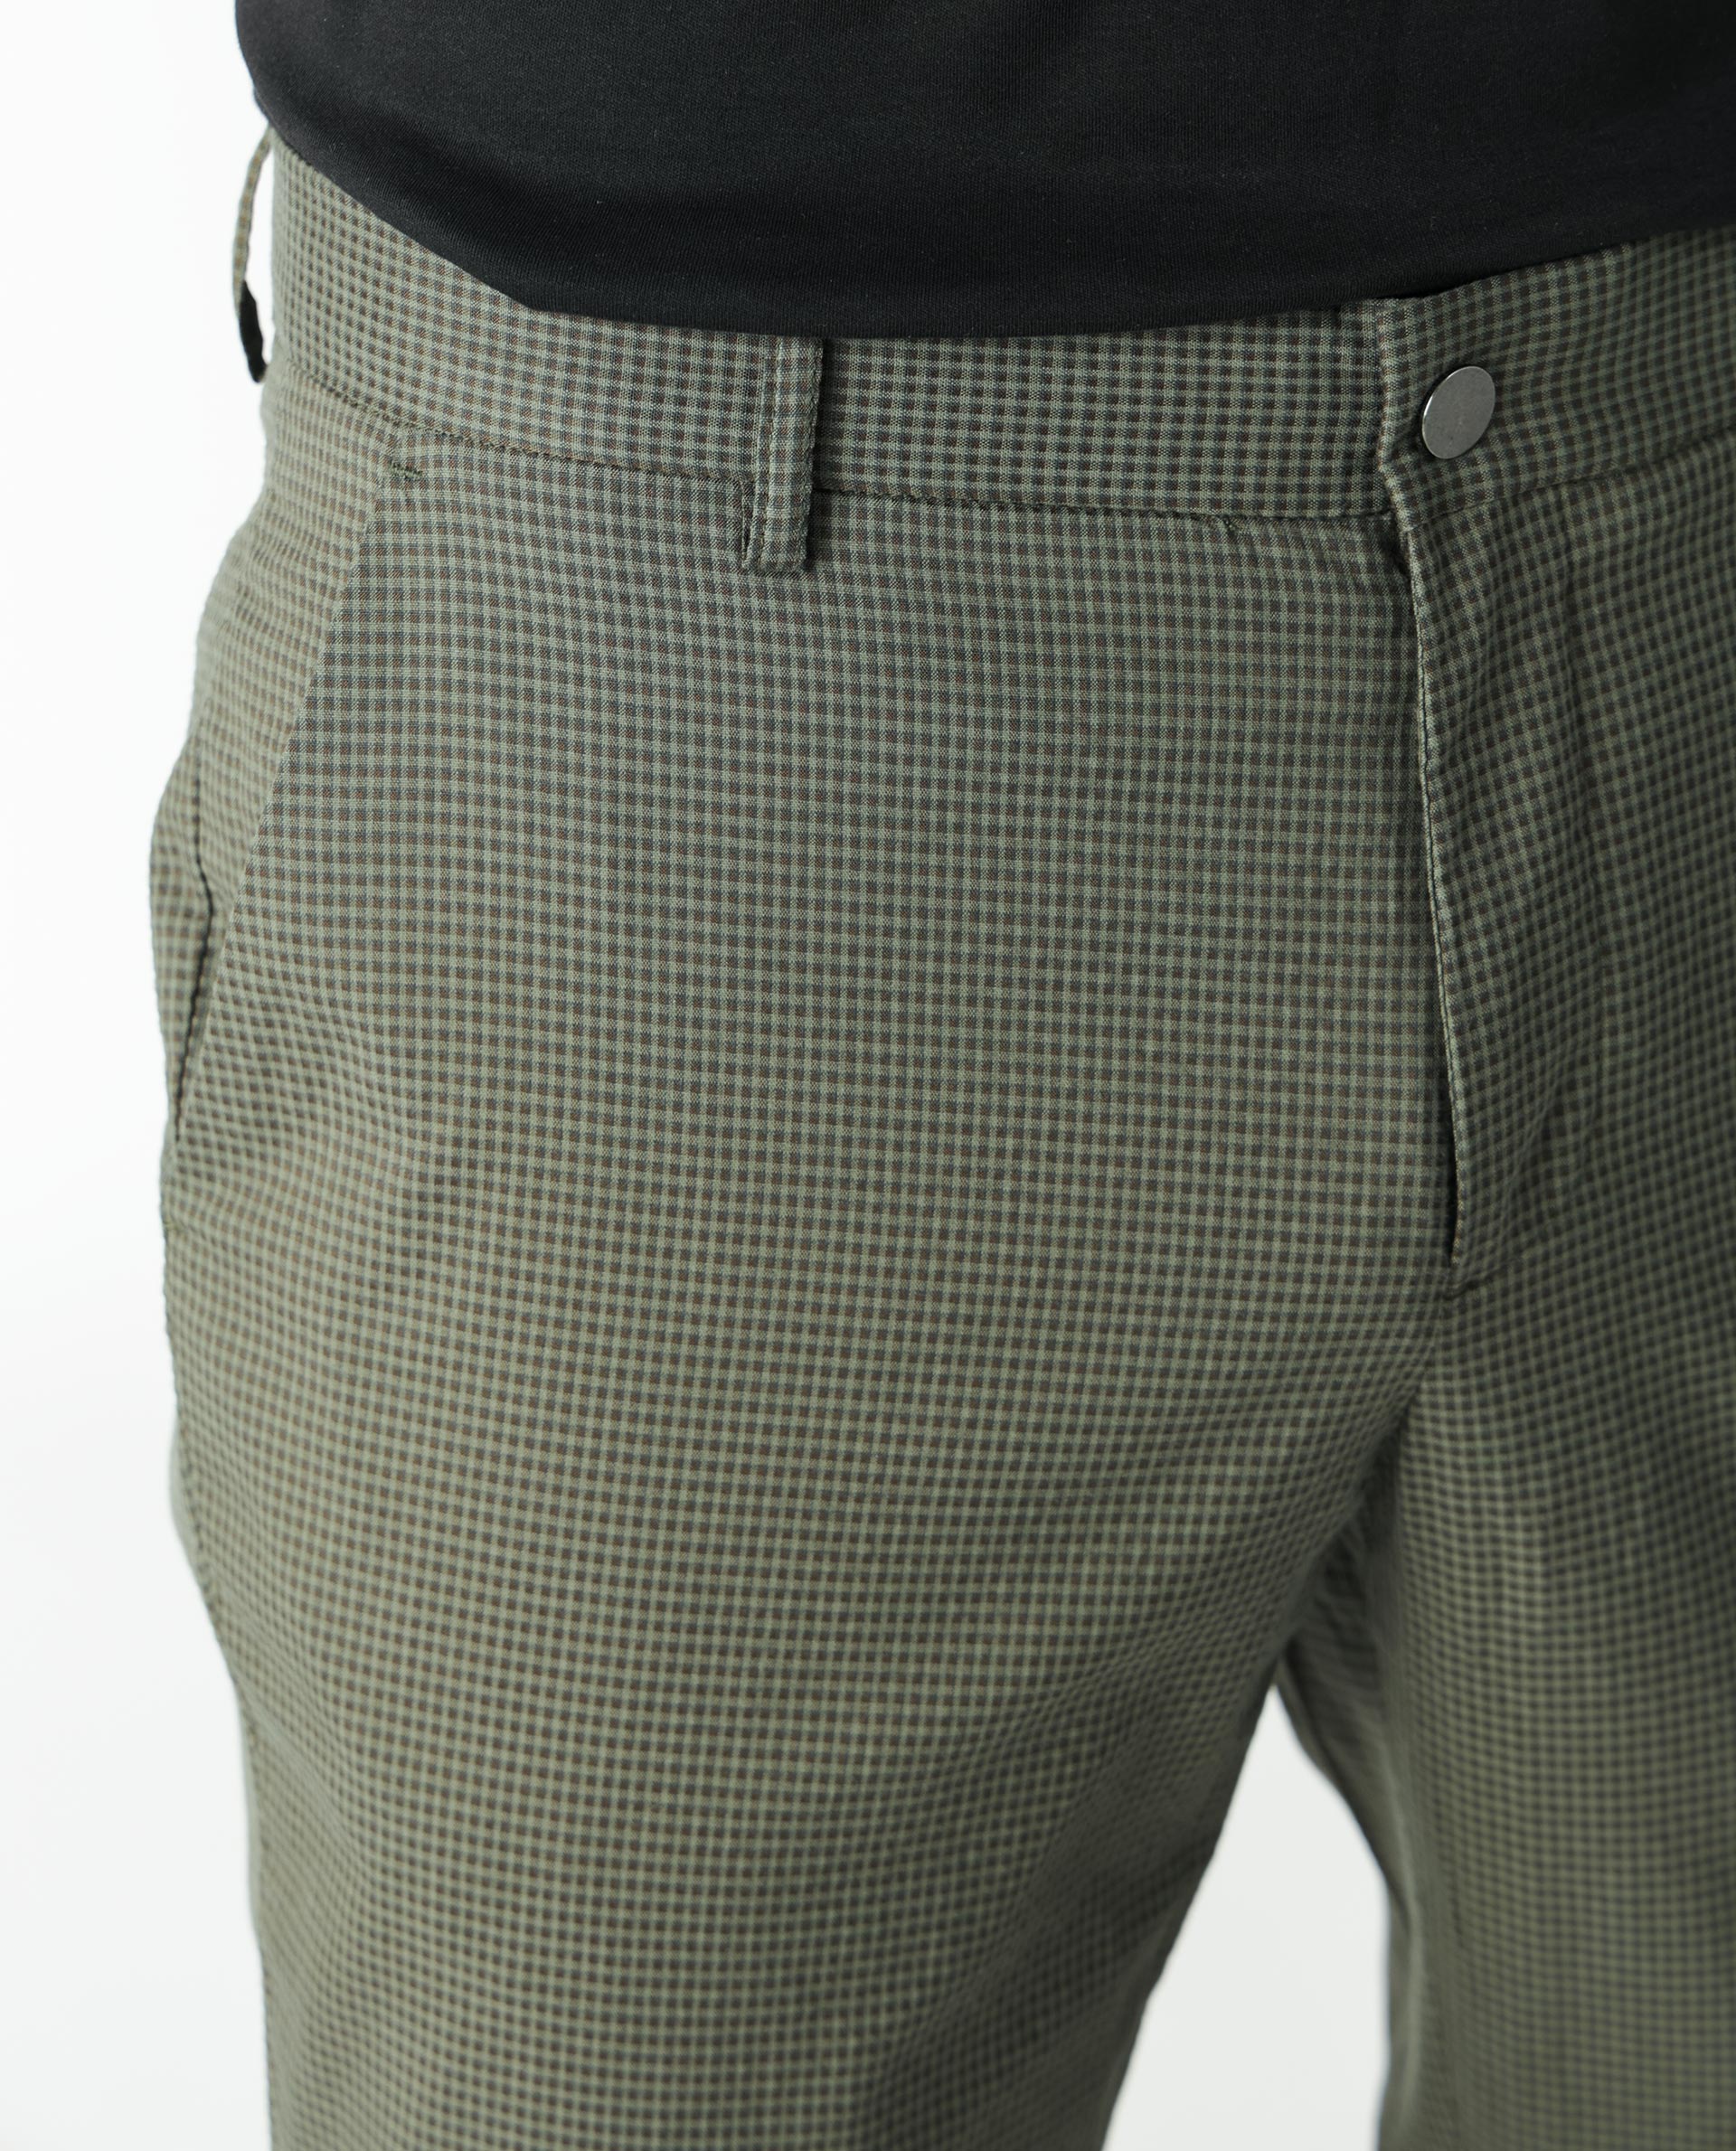 Men's Business Pants Skinny Plaid Stretch Slim Trousers Casual Golf Dress  Pants | eBay